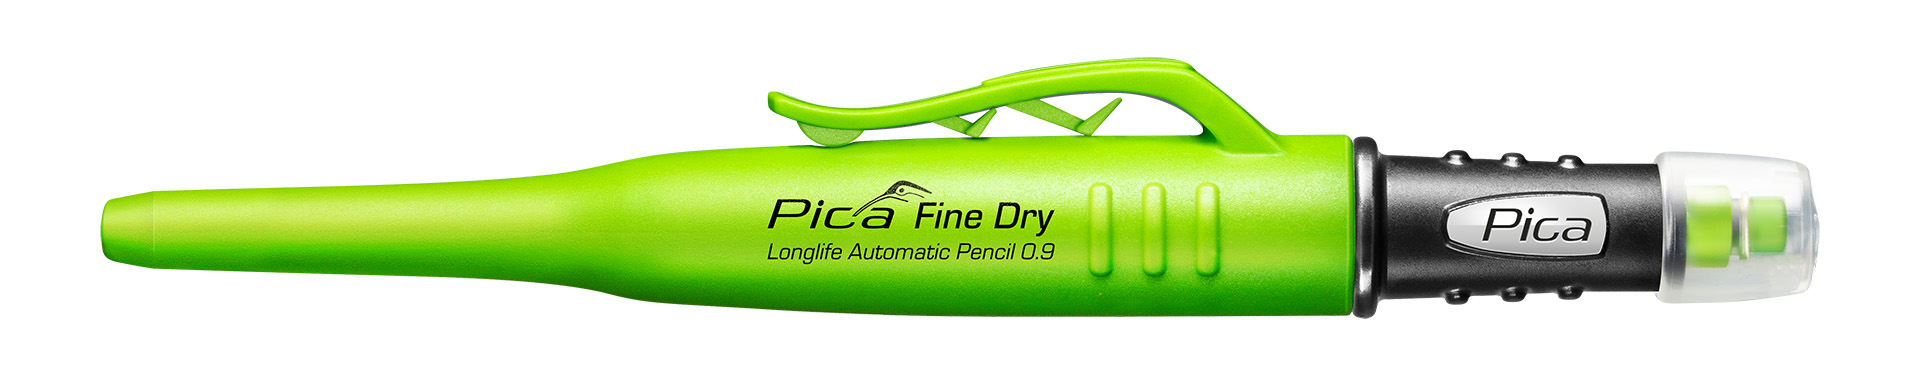 Imagen de Pica Dry Longlife Automatic Pencil